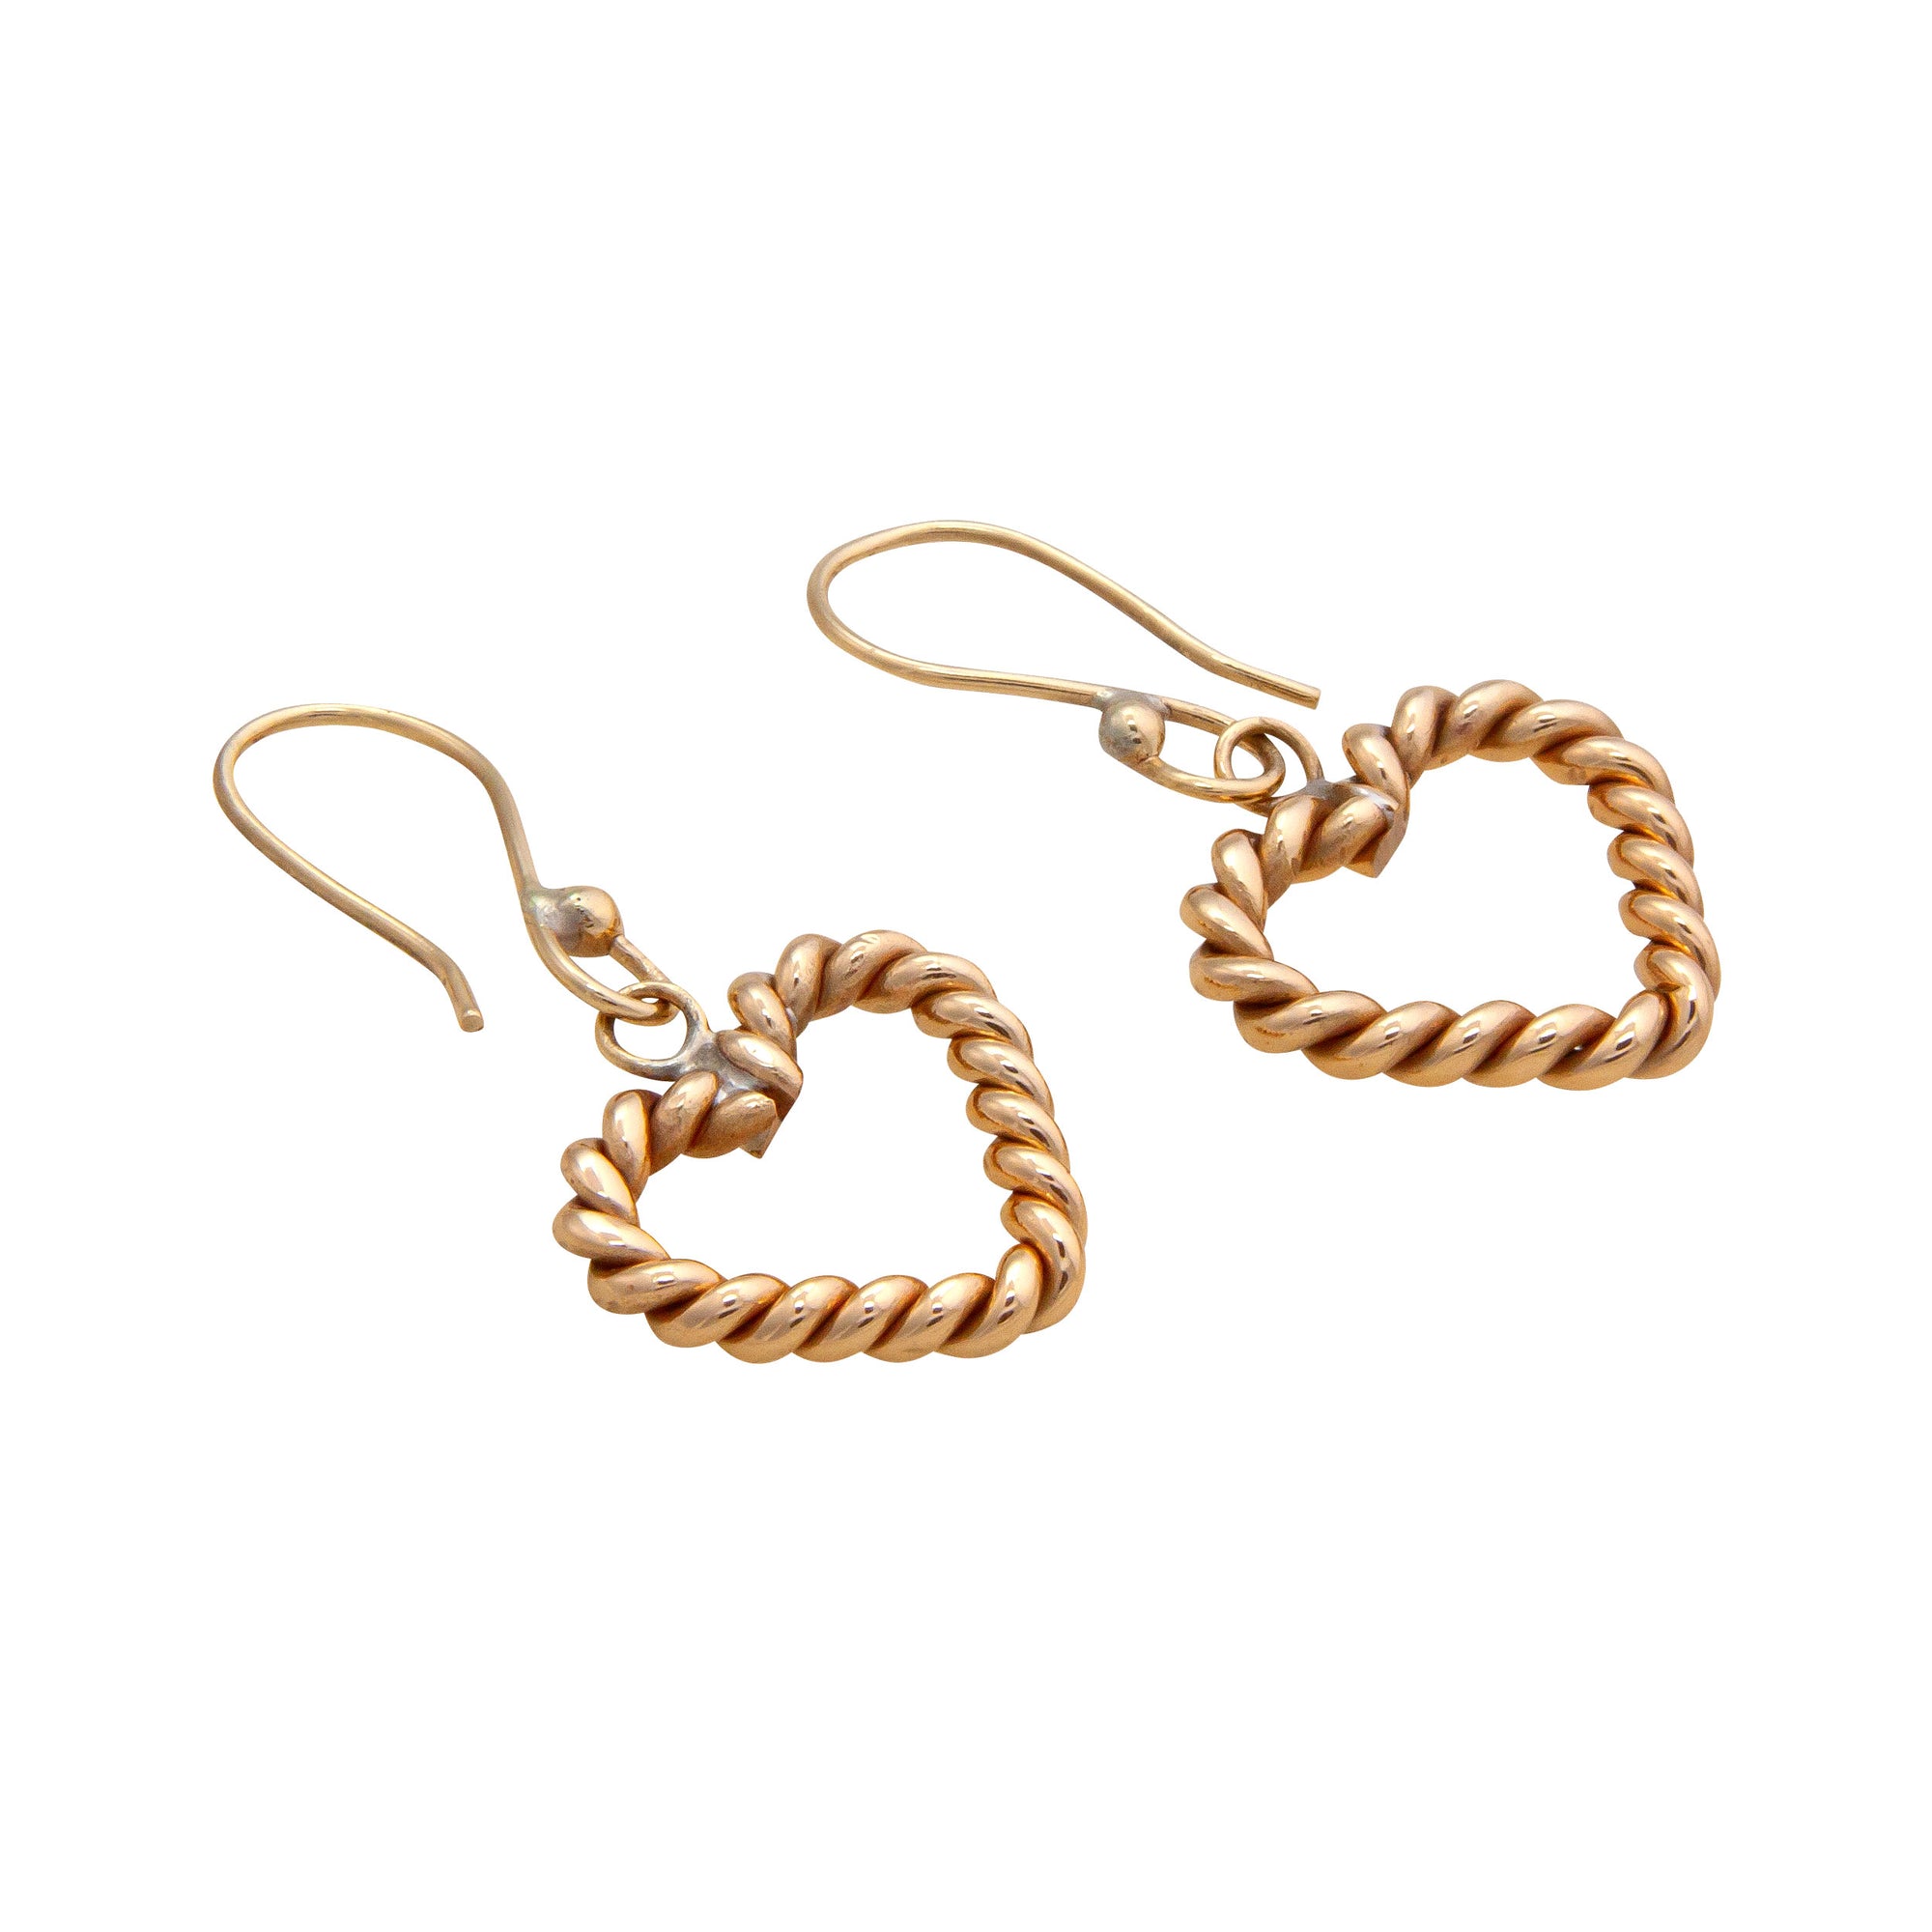 Alchemia Rope Heart Earrings | Charles Albert Jewelry